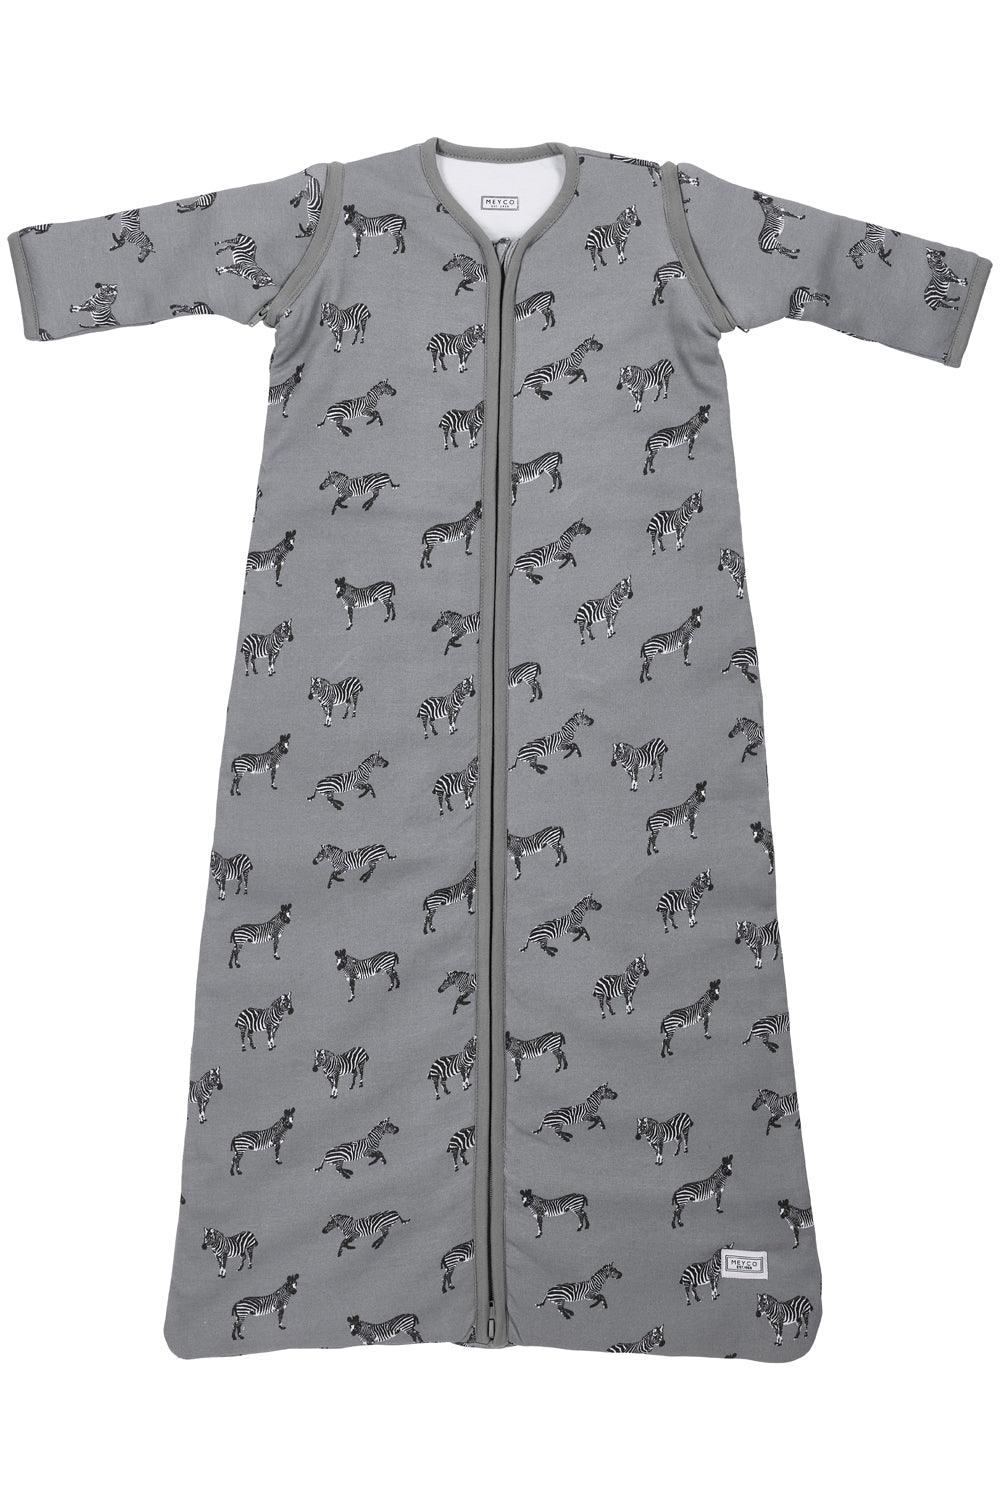 Baby Sleeping Bag, Detachable Sleeve Zebras Grey 70cm - Mari Kali Stores Cyprus